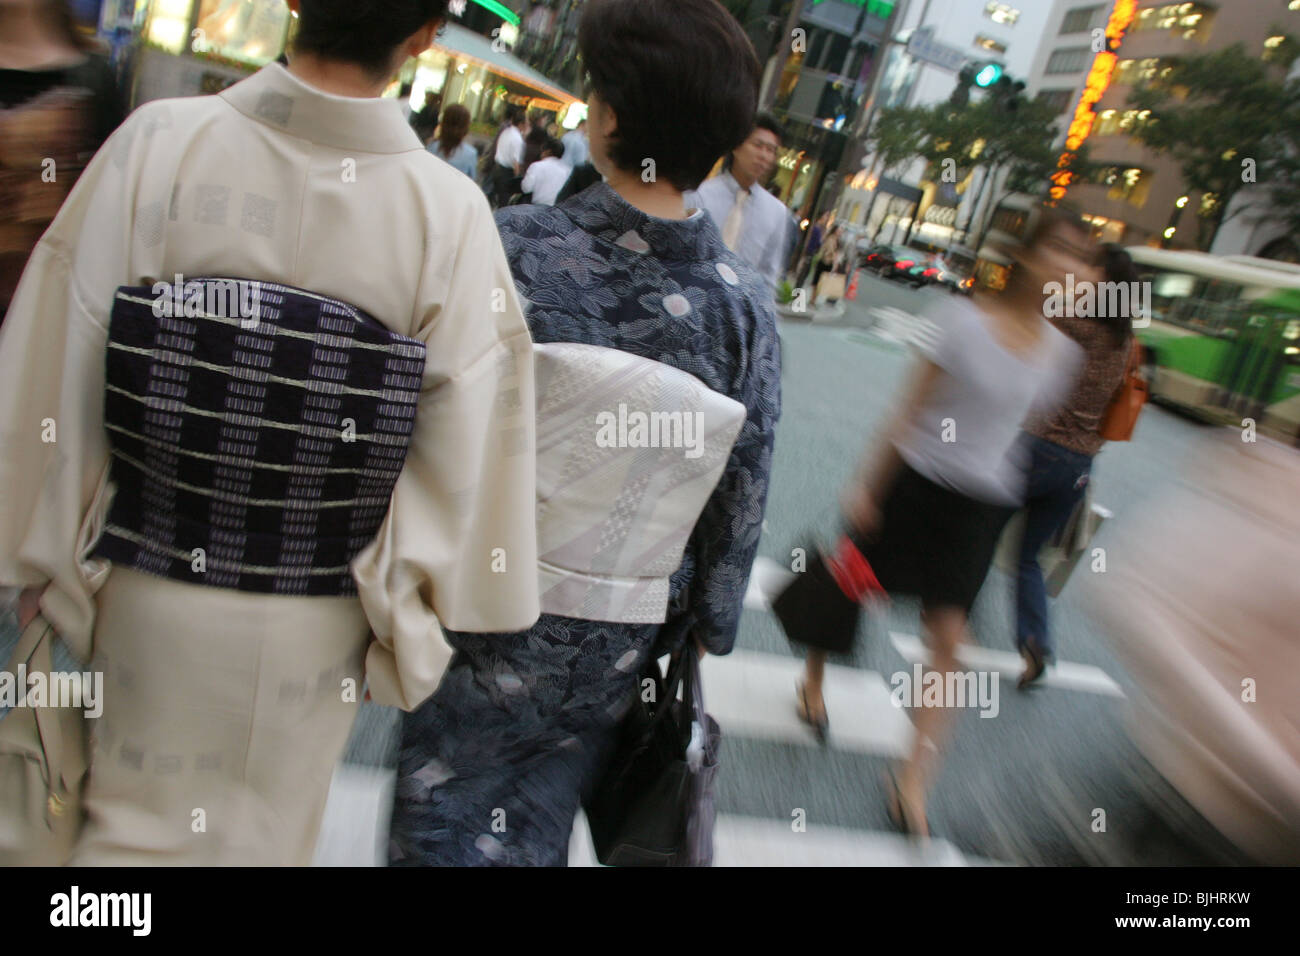 Japanese women in kimonos walking in Japanese city street. Stock Photo